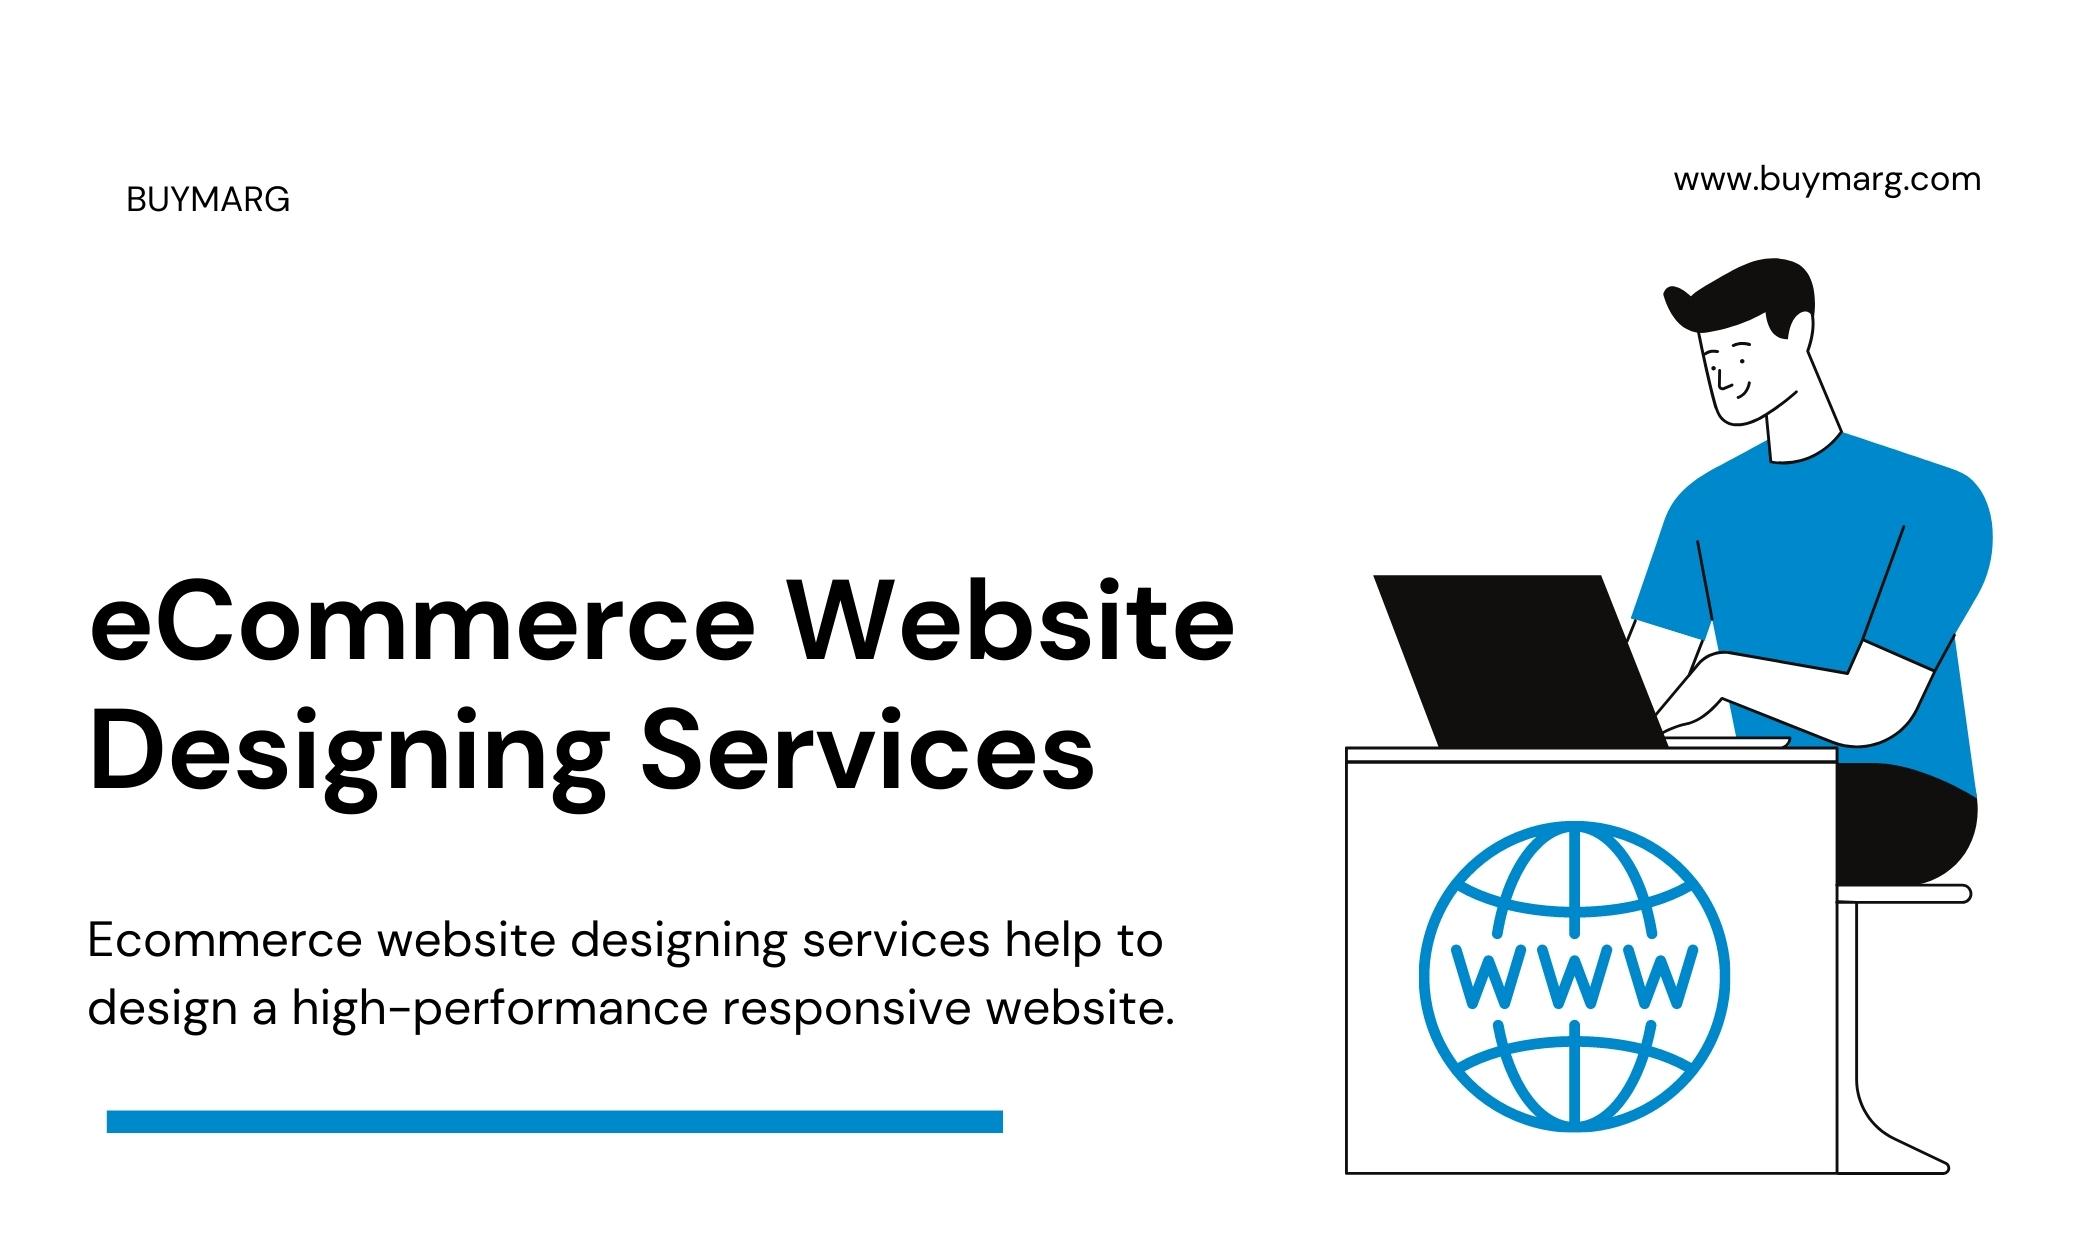 eCommerce Website Designing Services